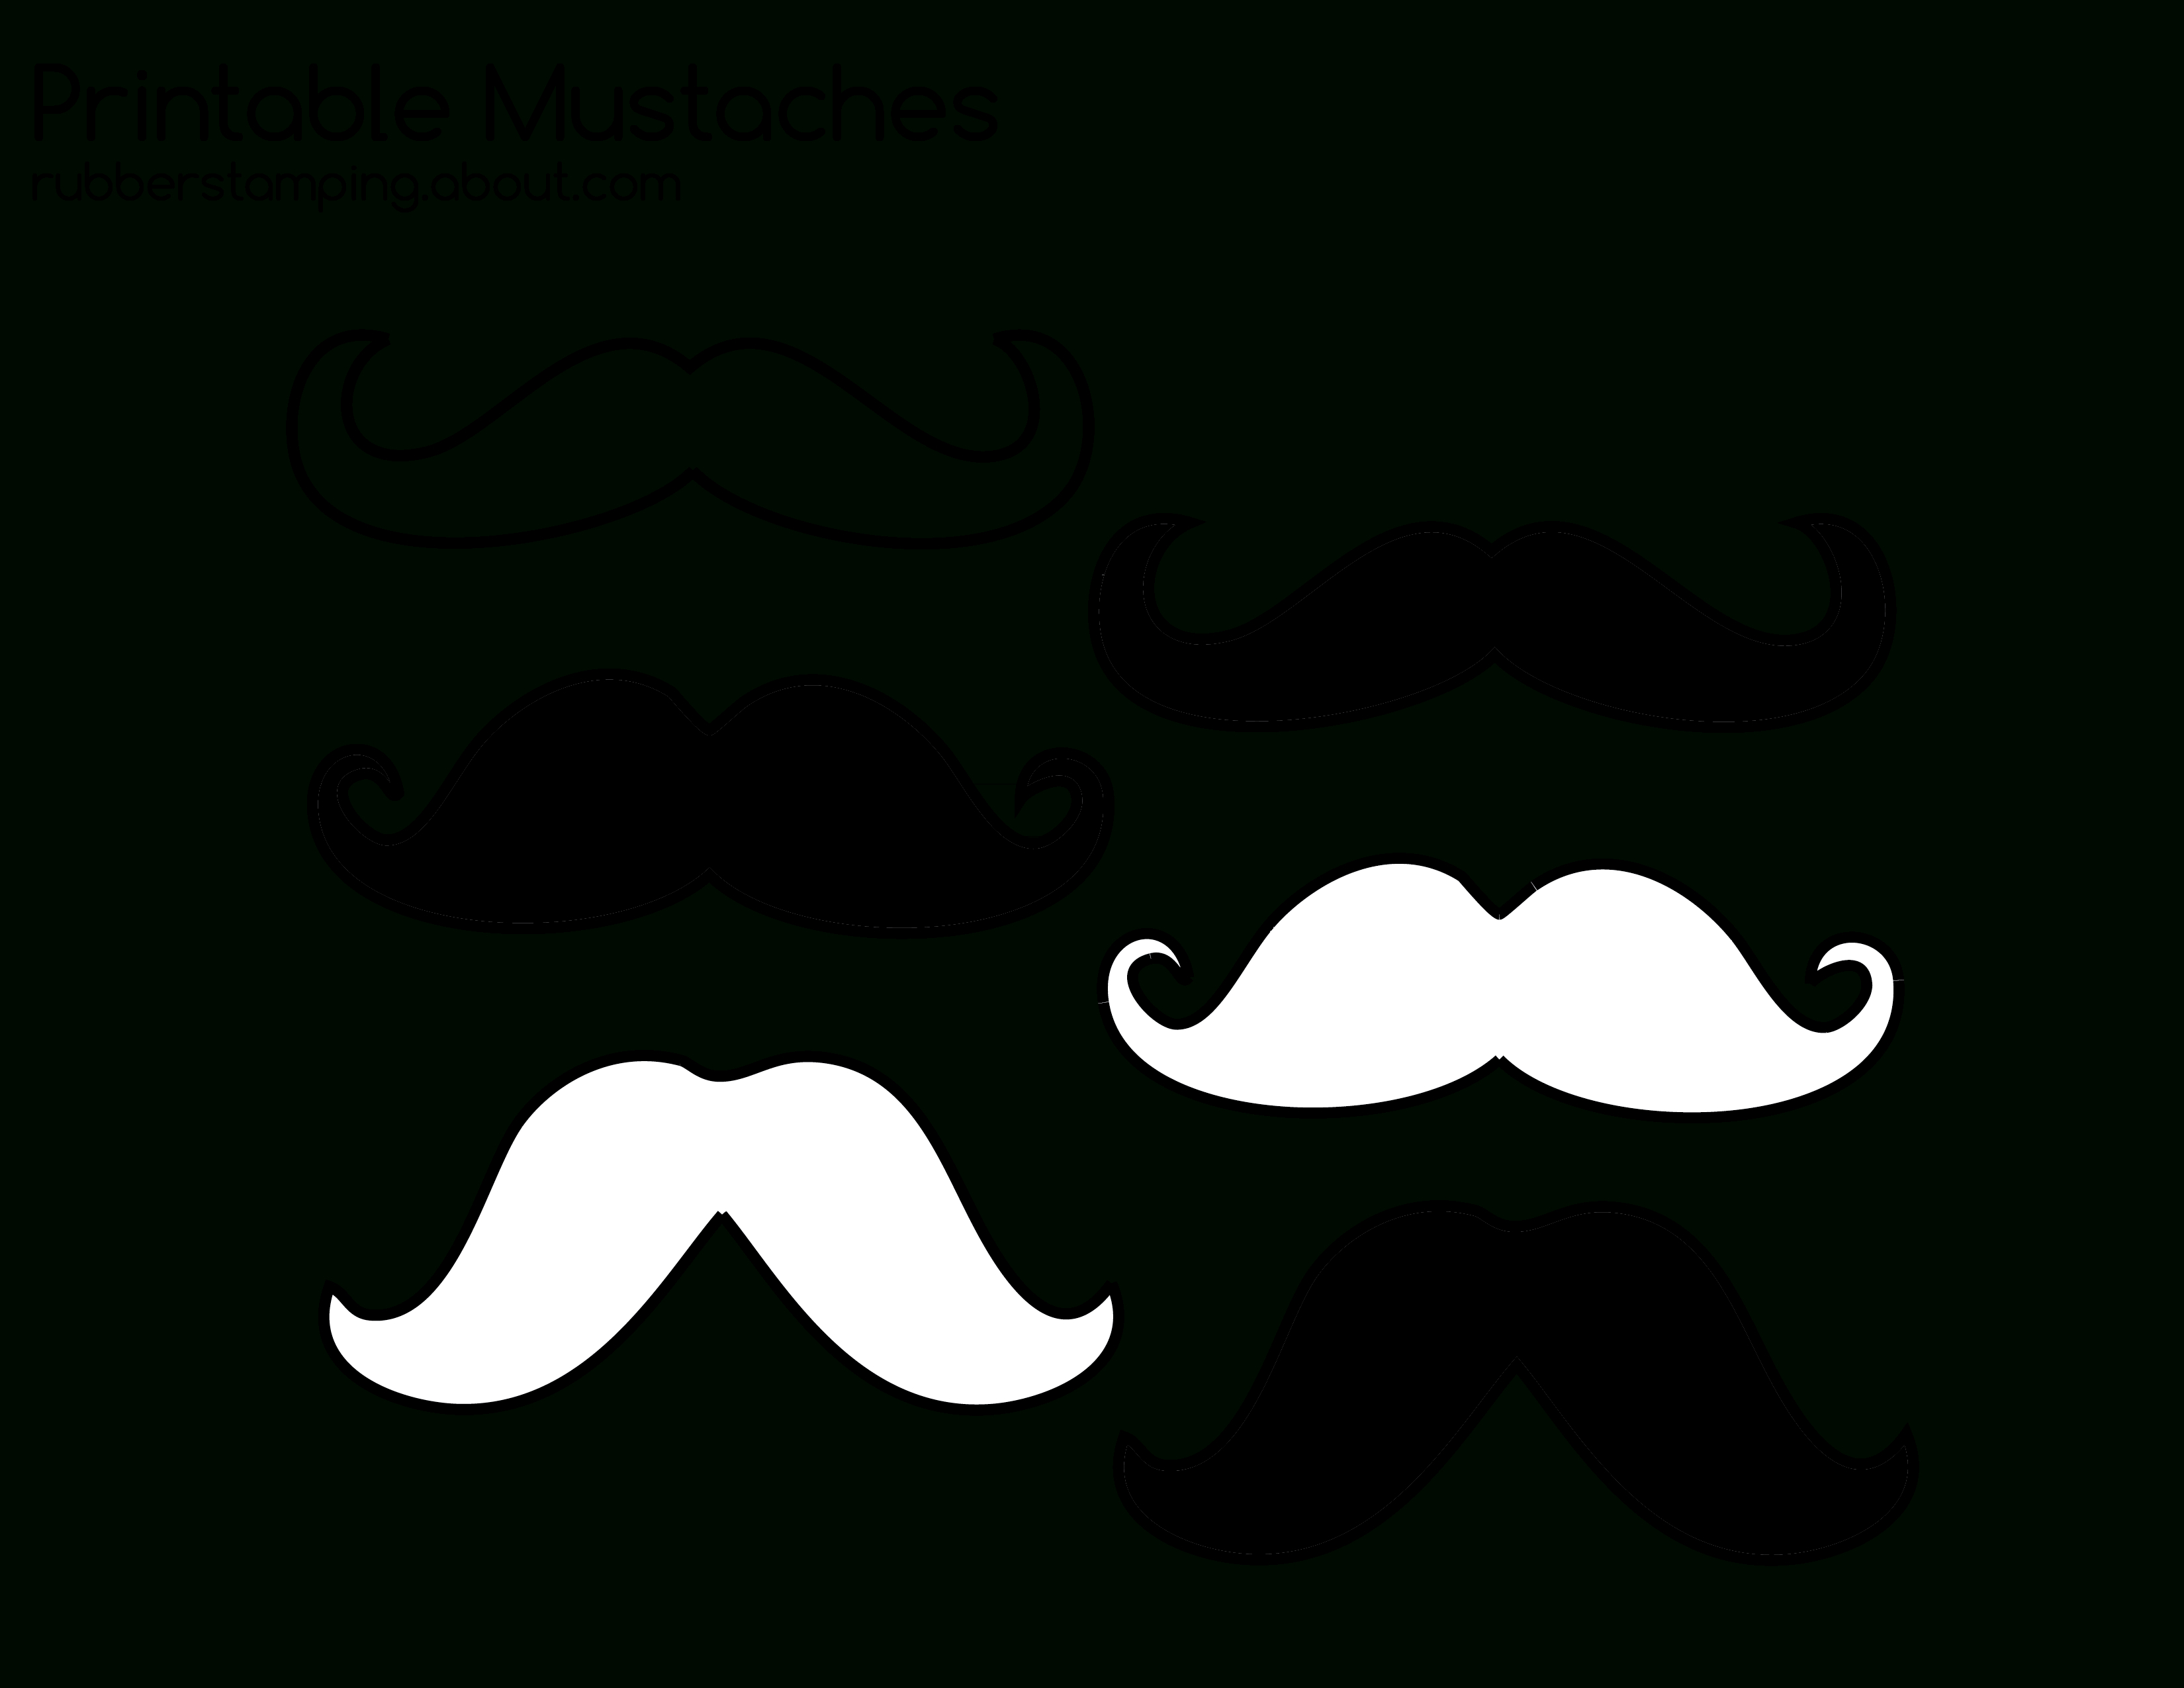 Free Printable Mustache Images | Diy | Mustache Crafts, Mustache - Free Printable Mustache